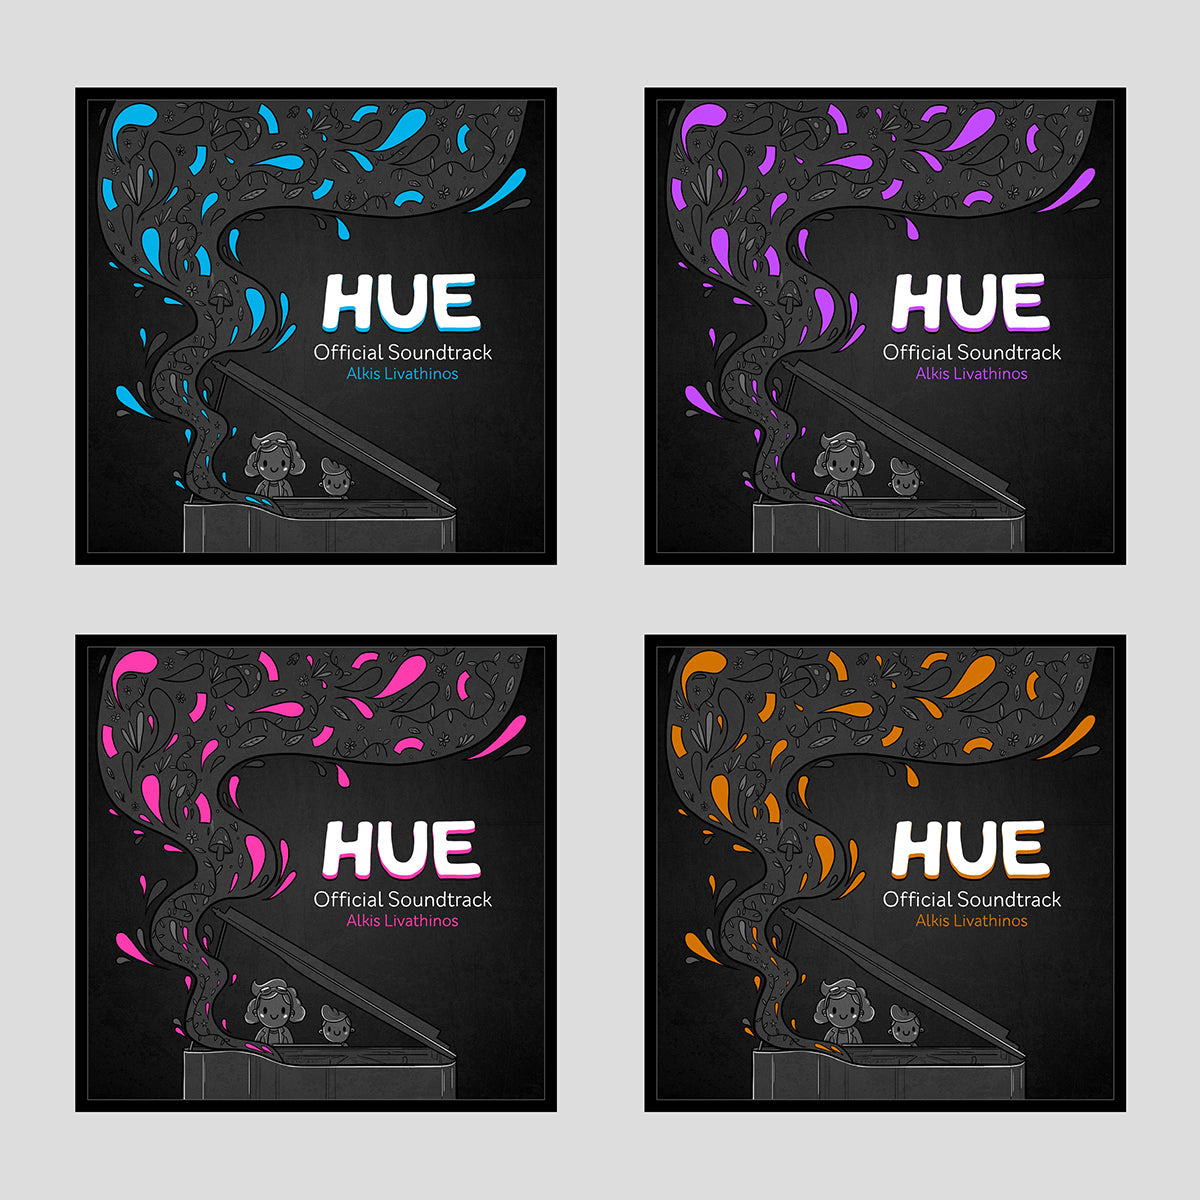 Hue (Official Soundtrack)